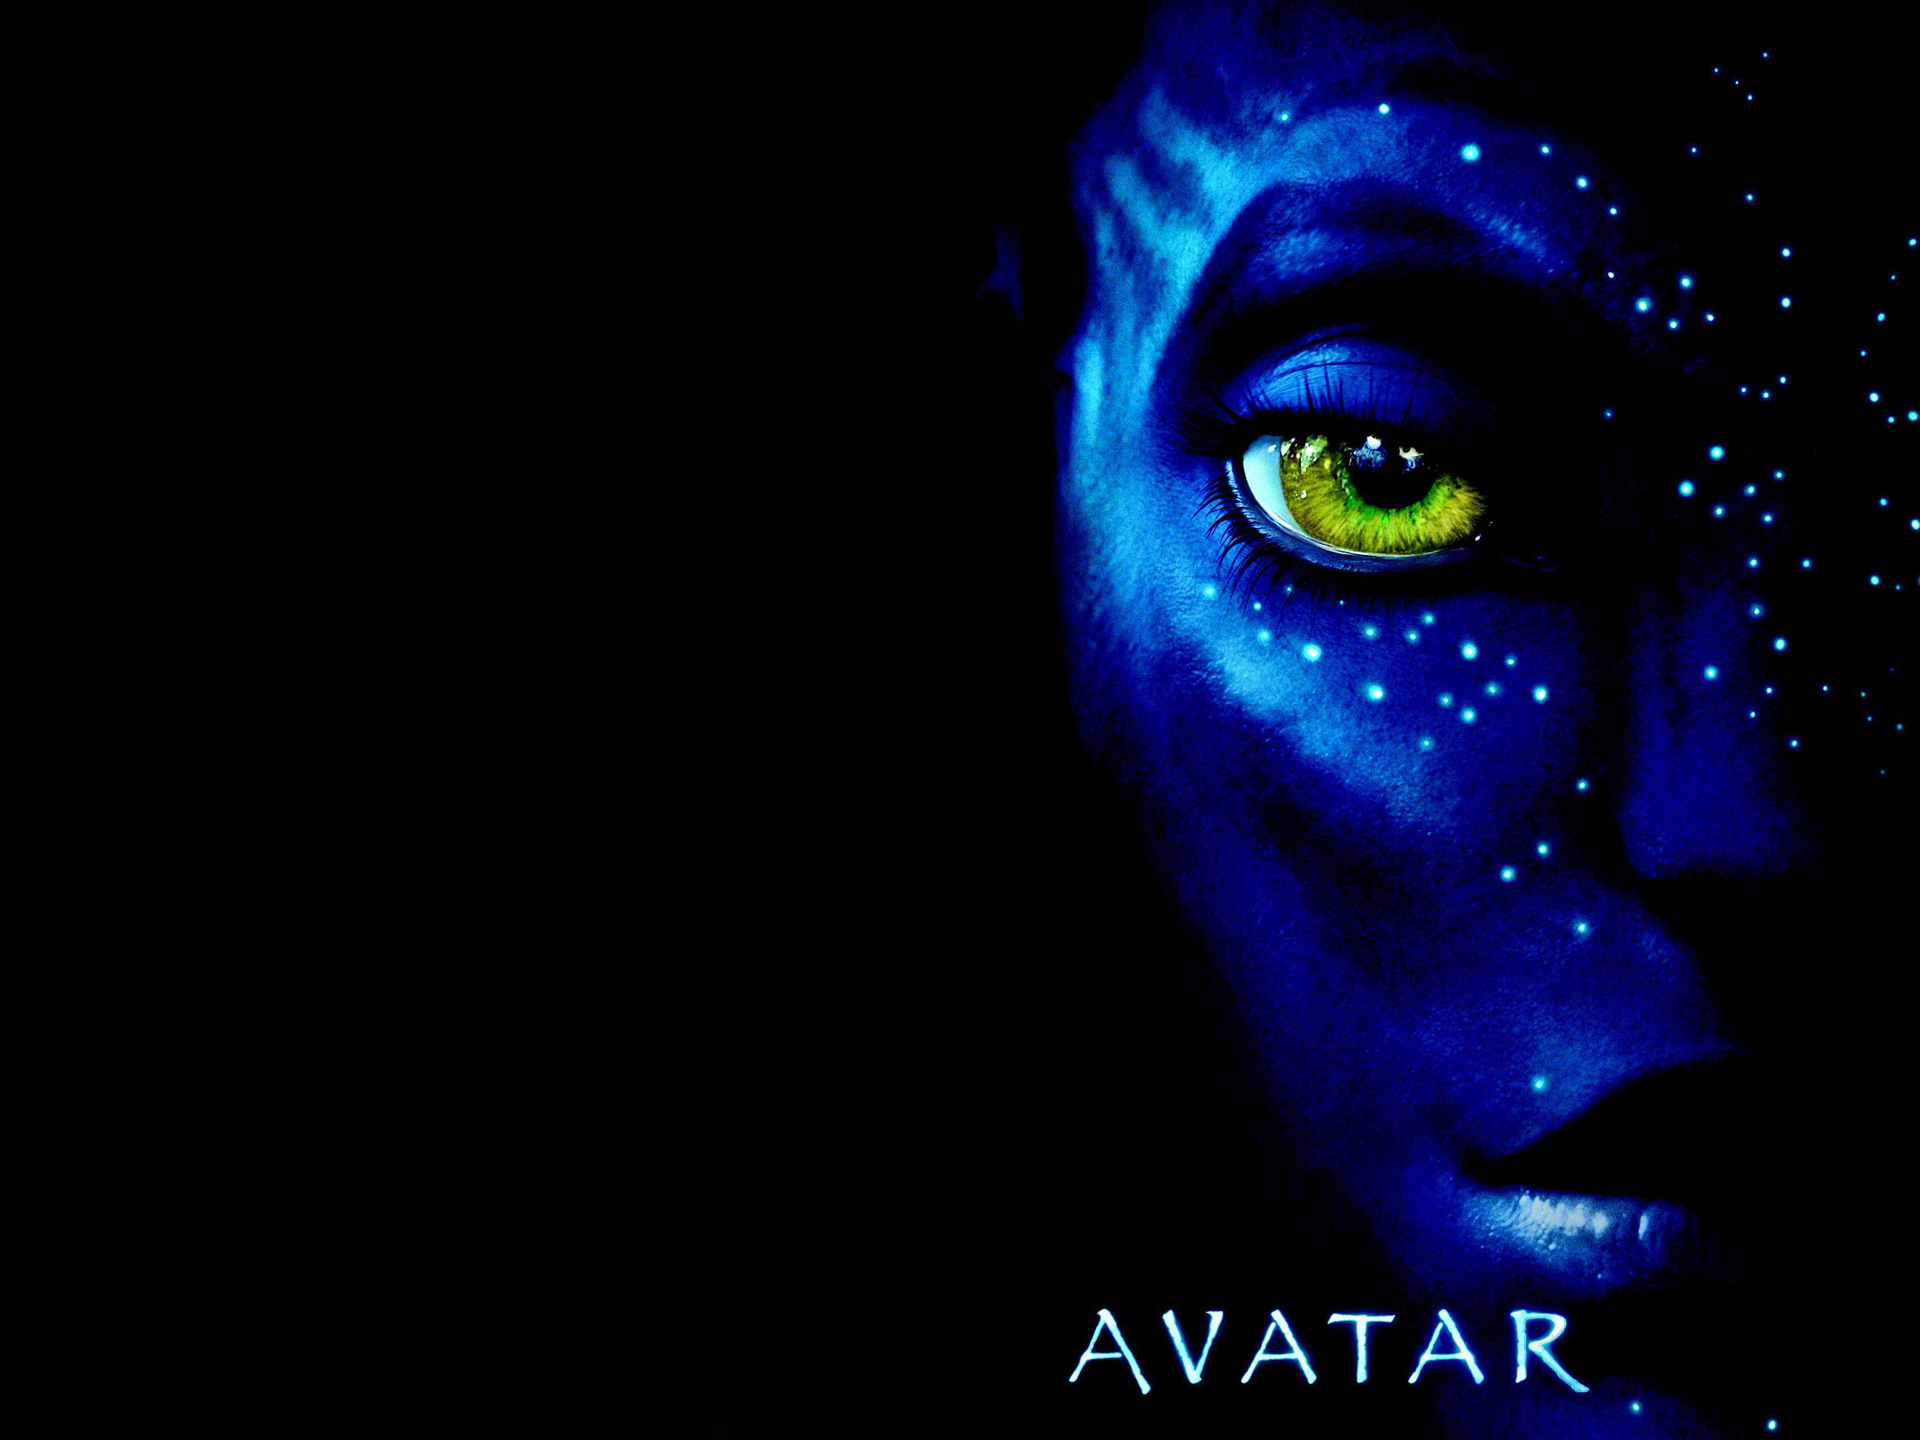 Avatar 2009 - Release Info - IMDb